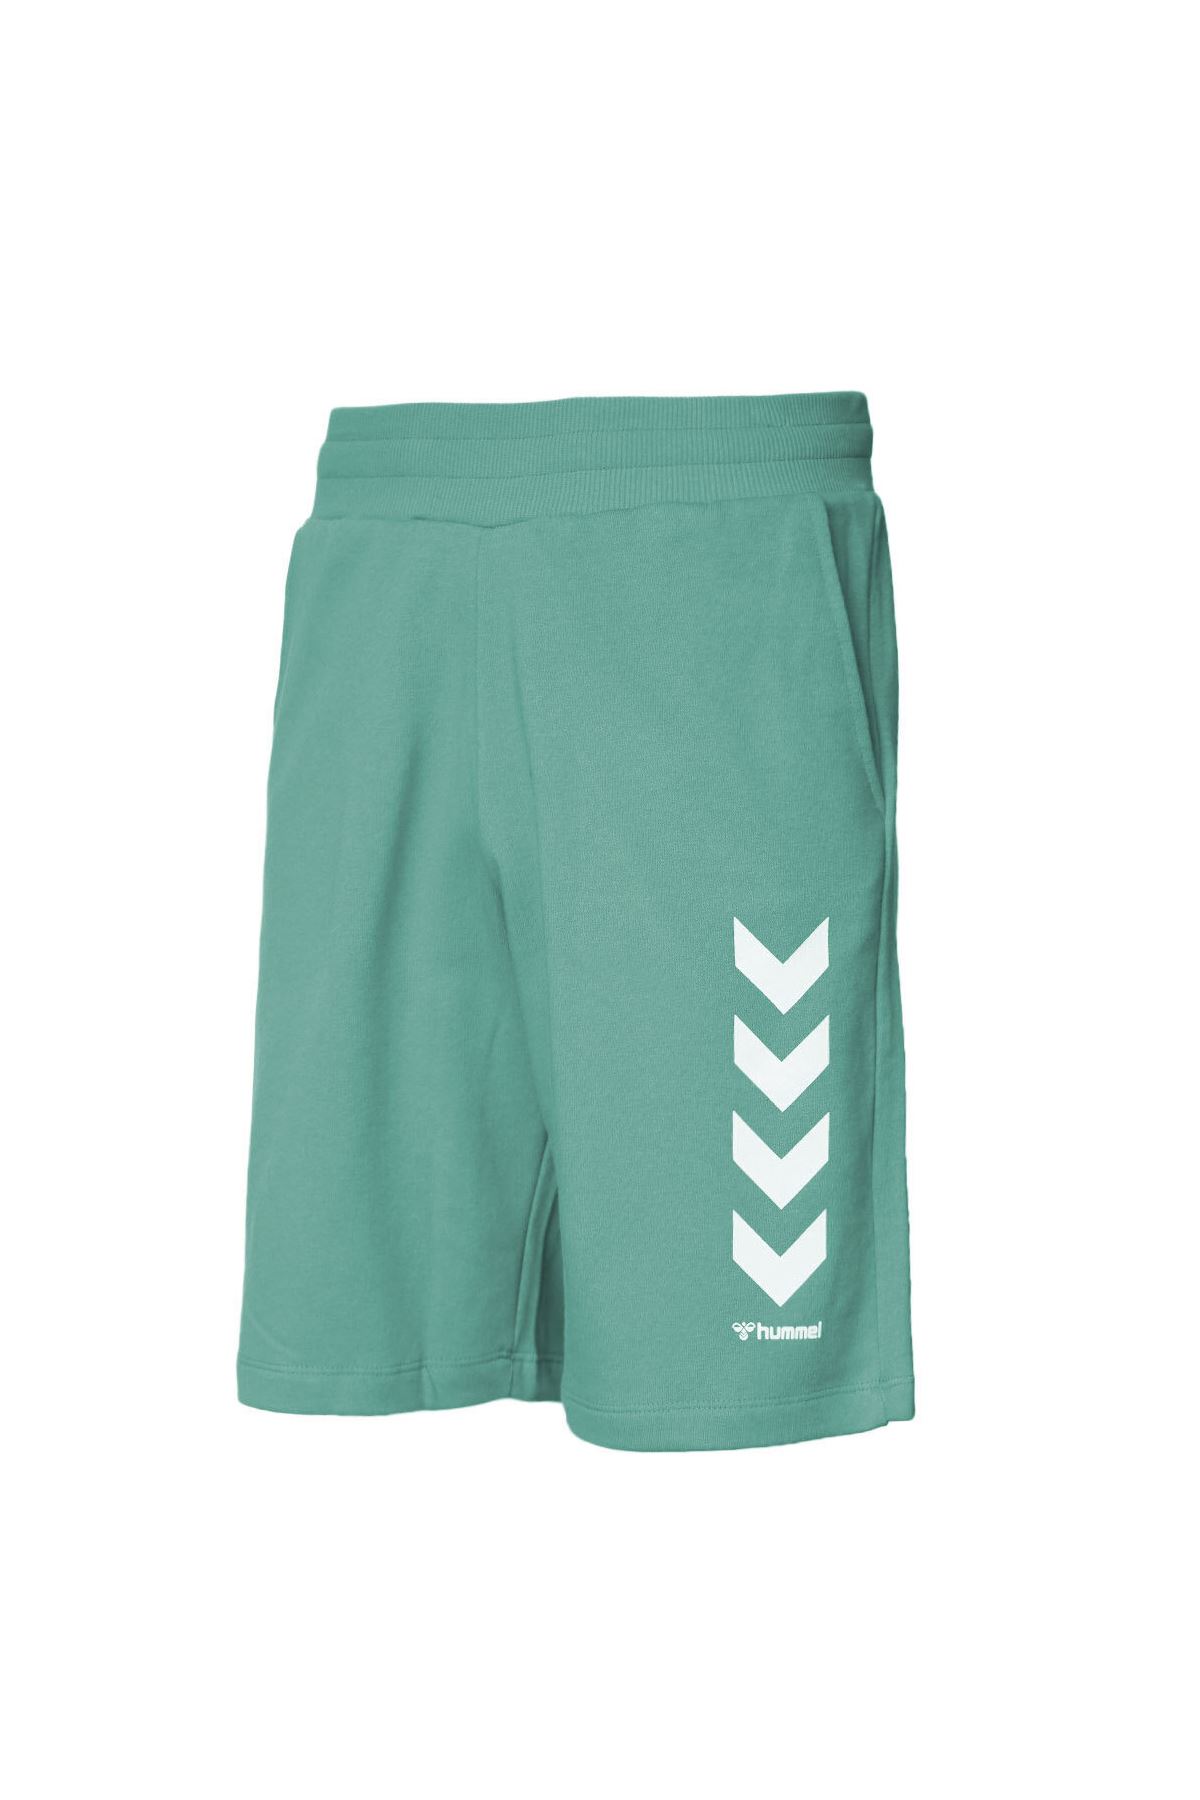 Hummel Hmlkens Shorts Erkek Yeşil Şort - 931152-6110